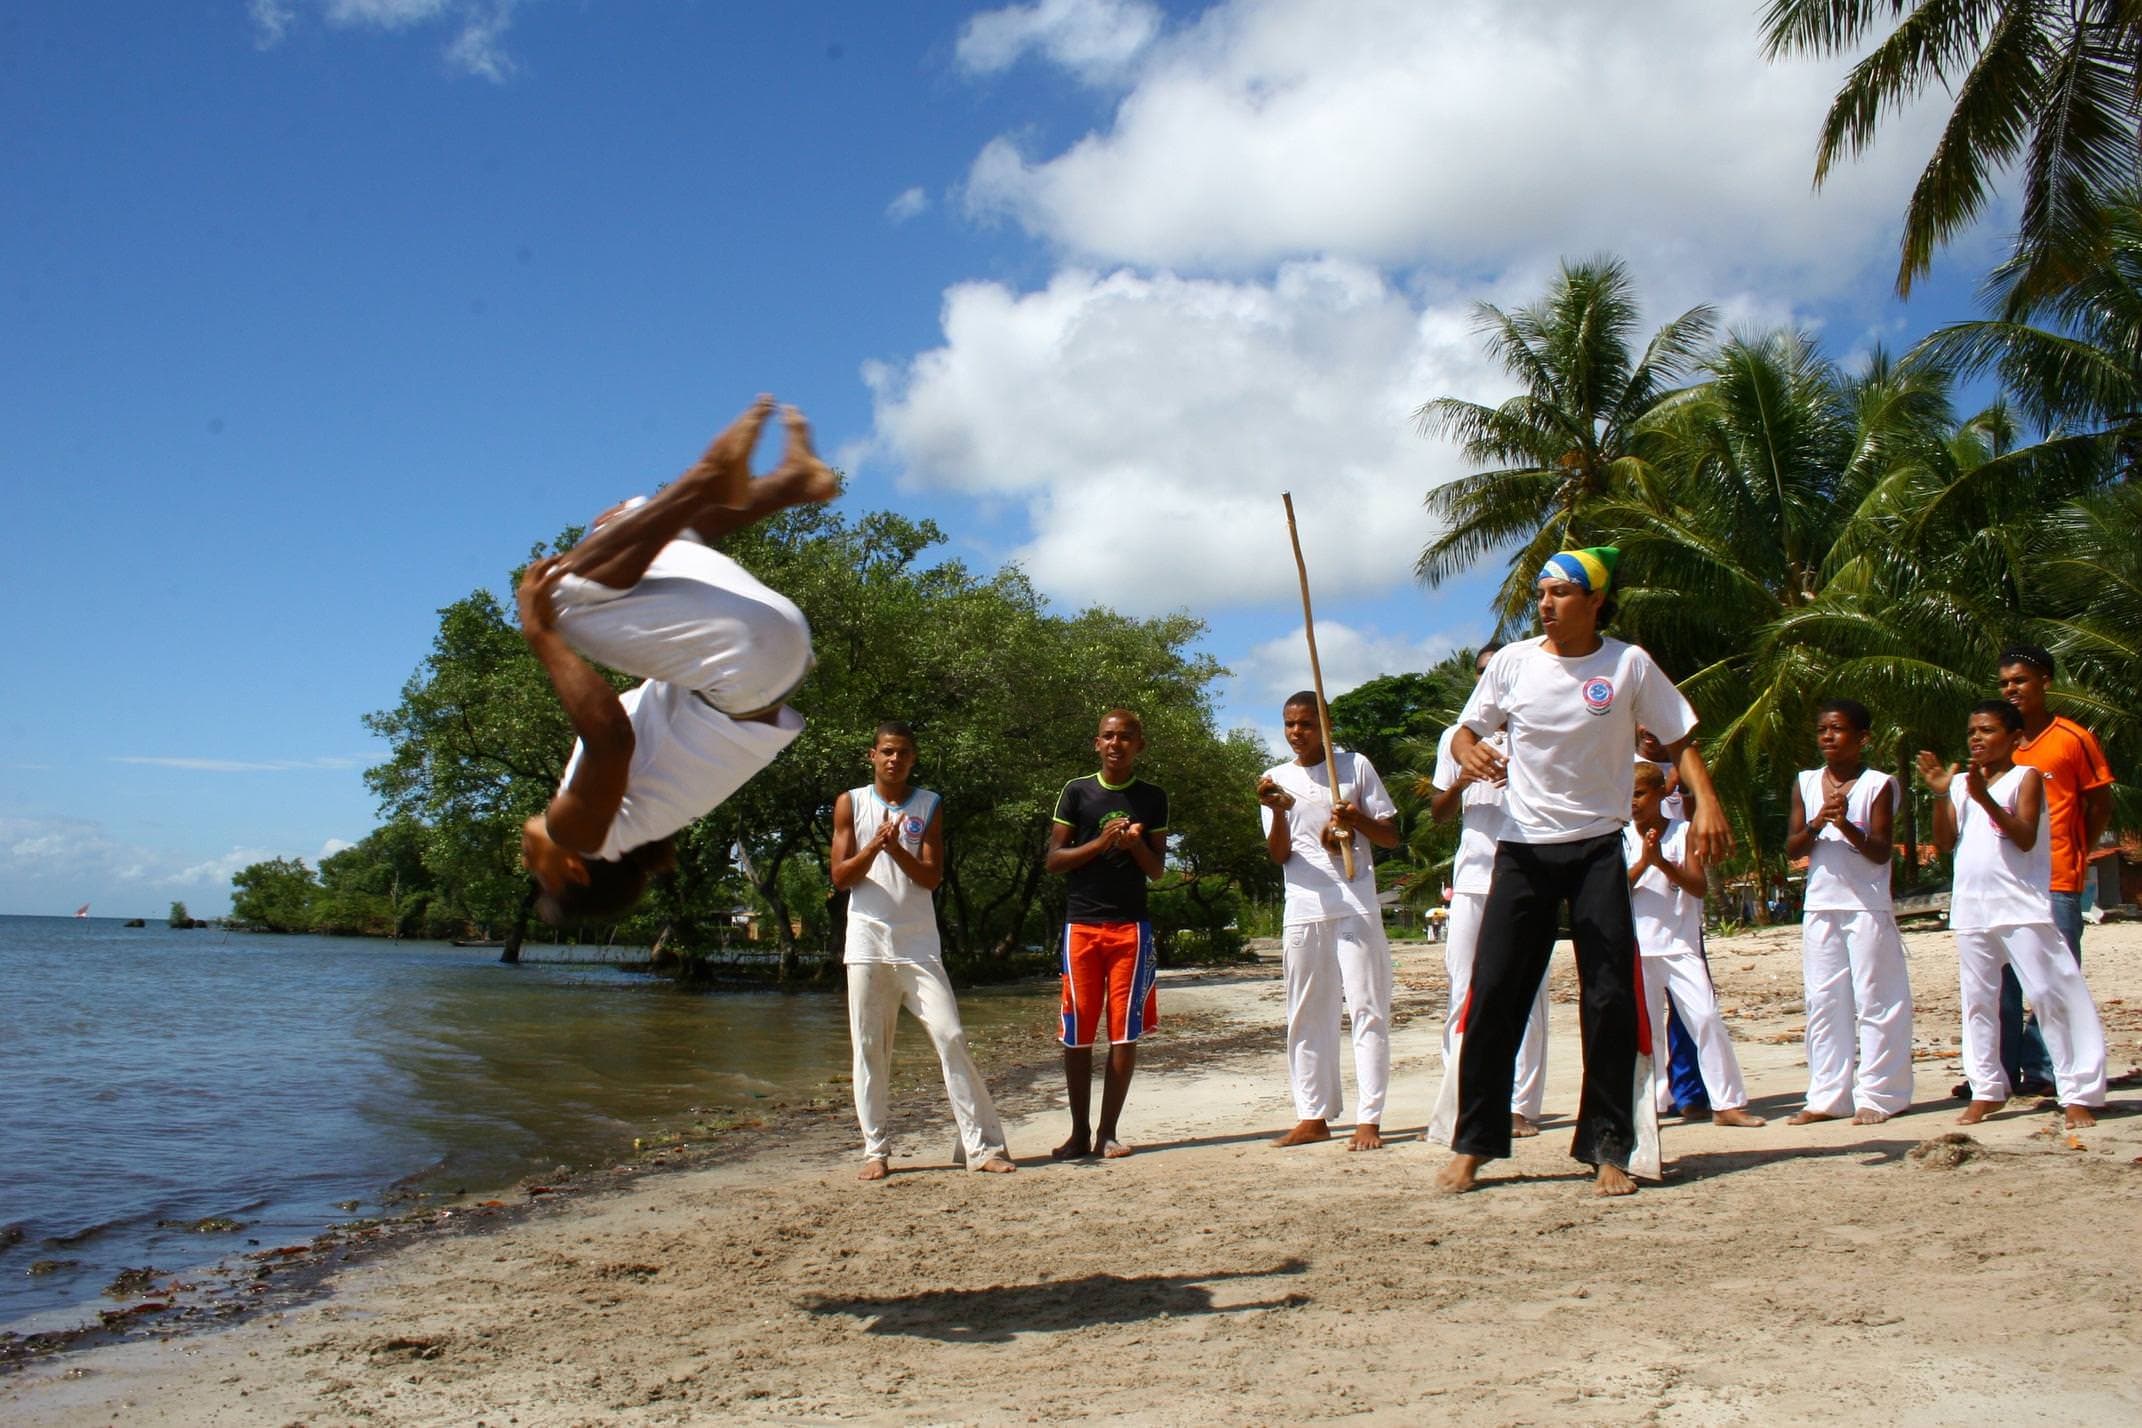 Brazil bahia boipeba island capoeira on beach